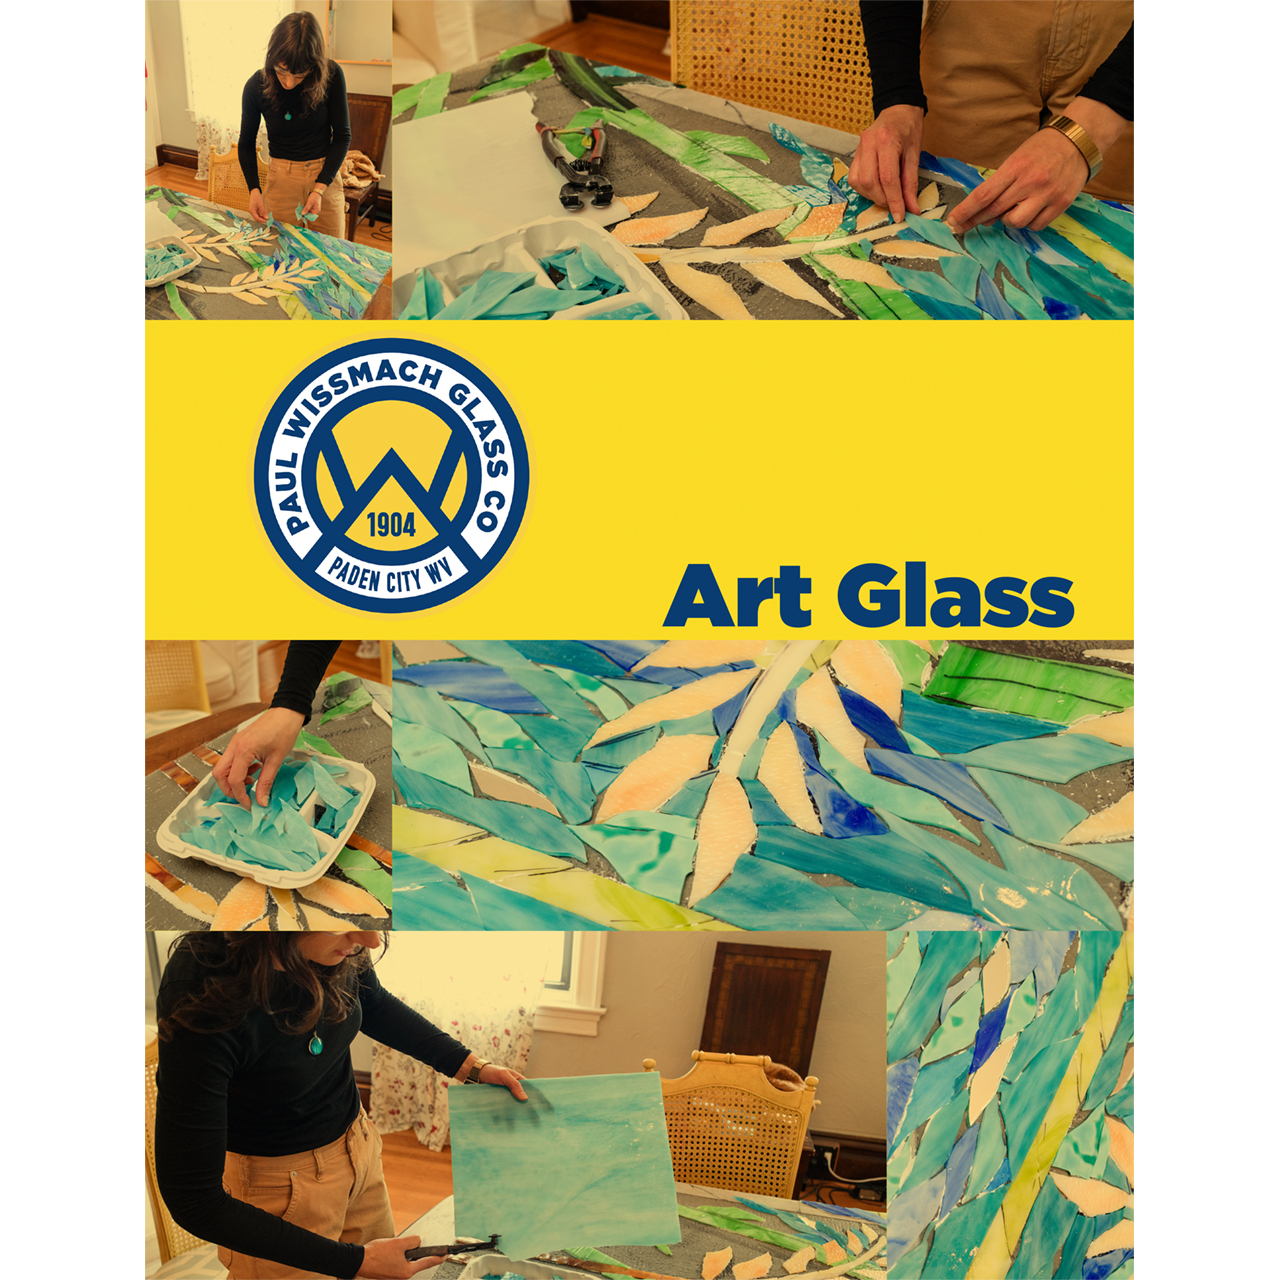 Katalog WISSMACH GLASS Art Glass